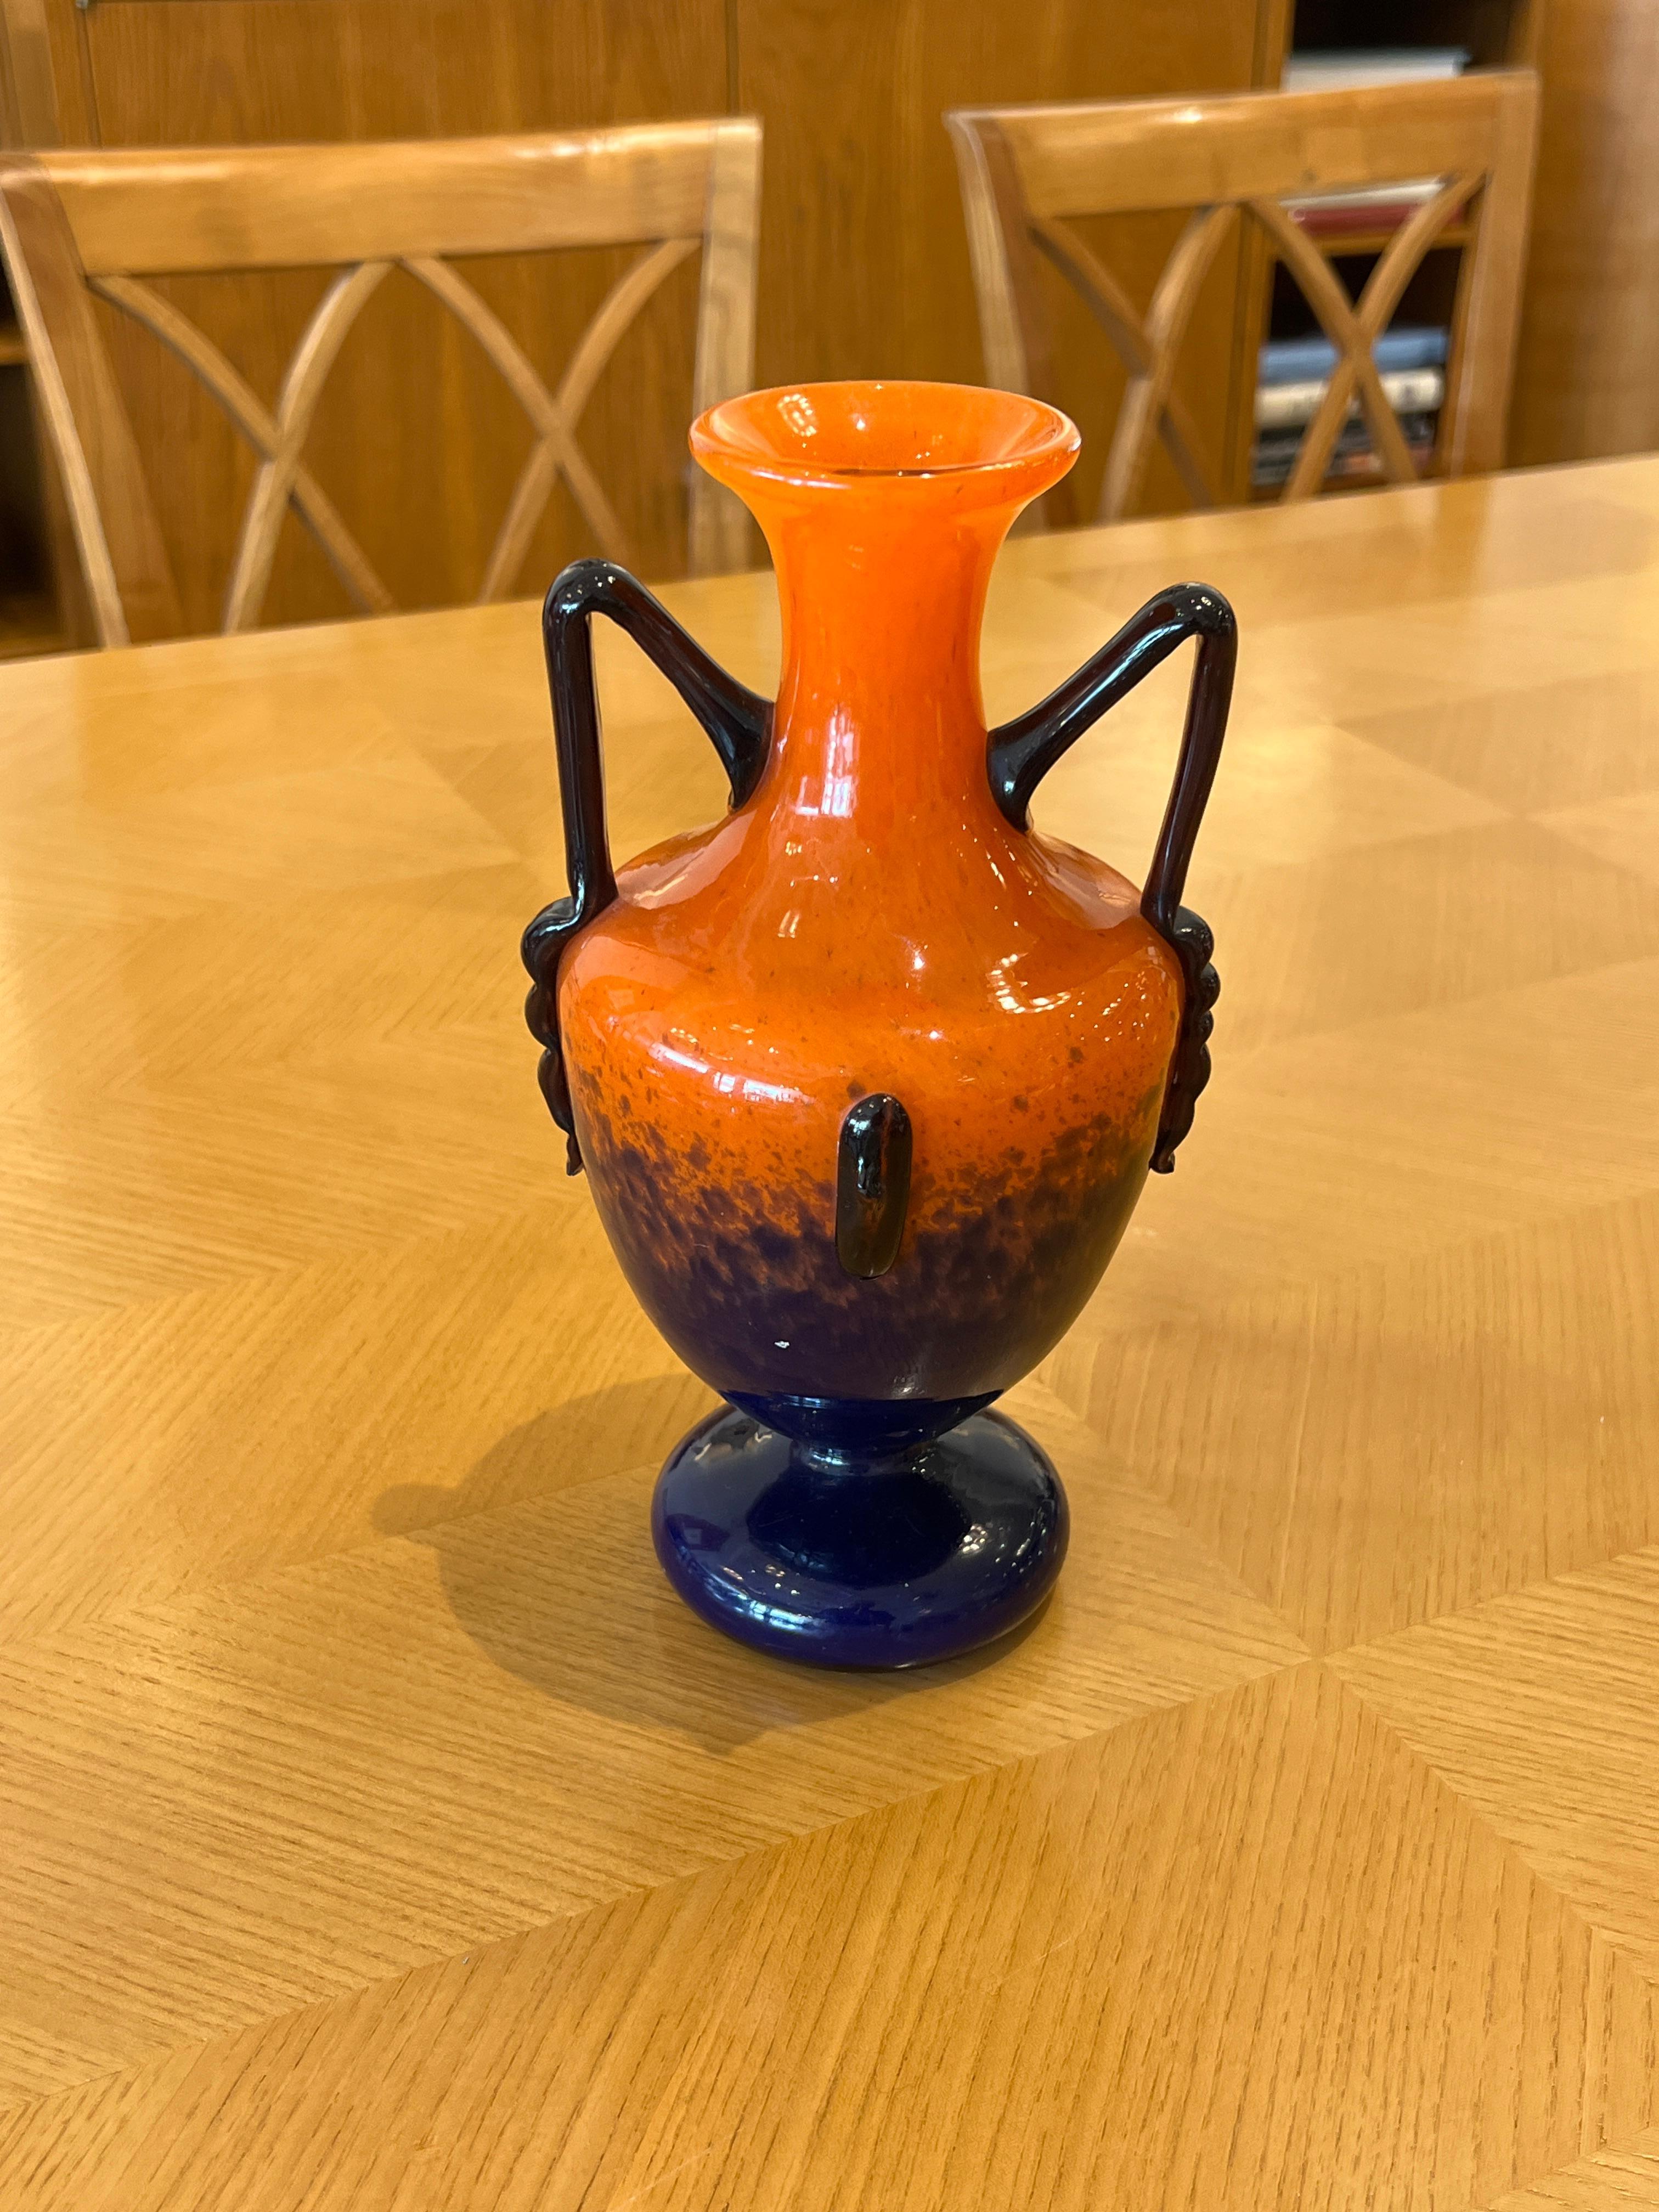 Art Deco glass vase by Charles Schneider studio piece in orange and cobalt blue colors with purple applications.

Signature: Schneider